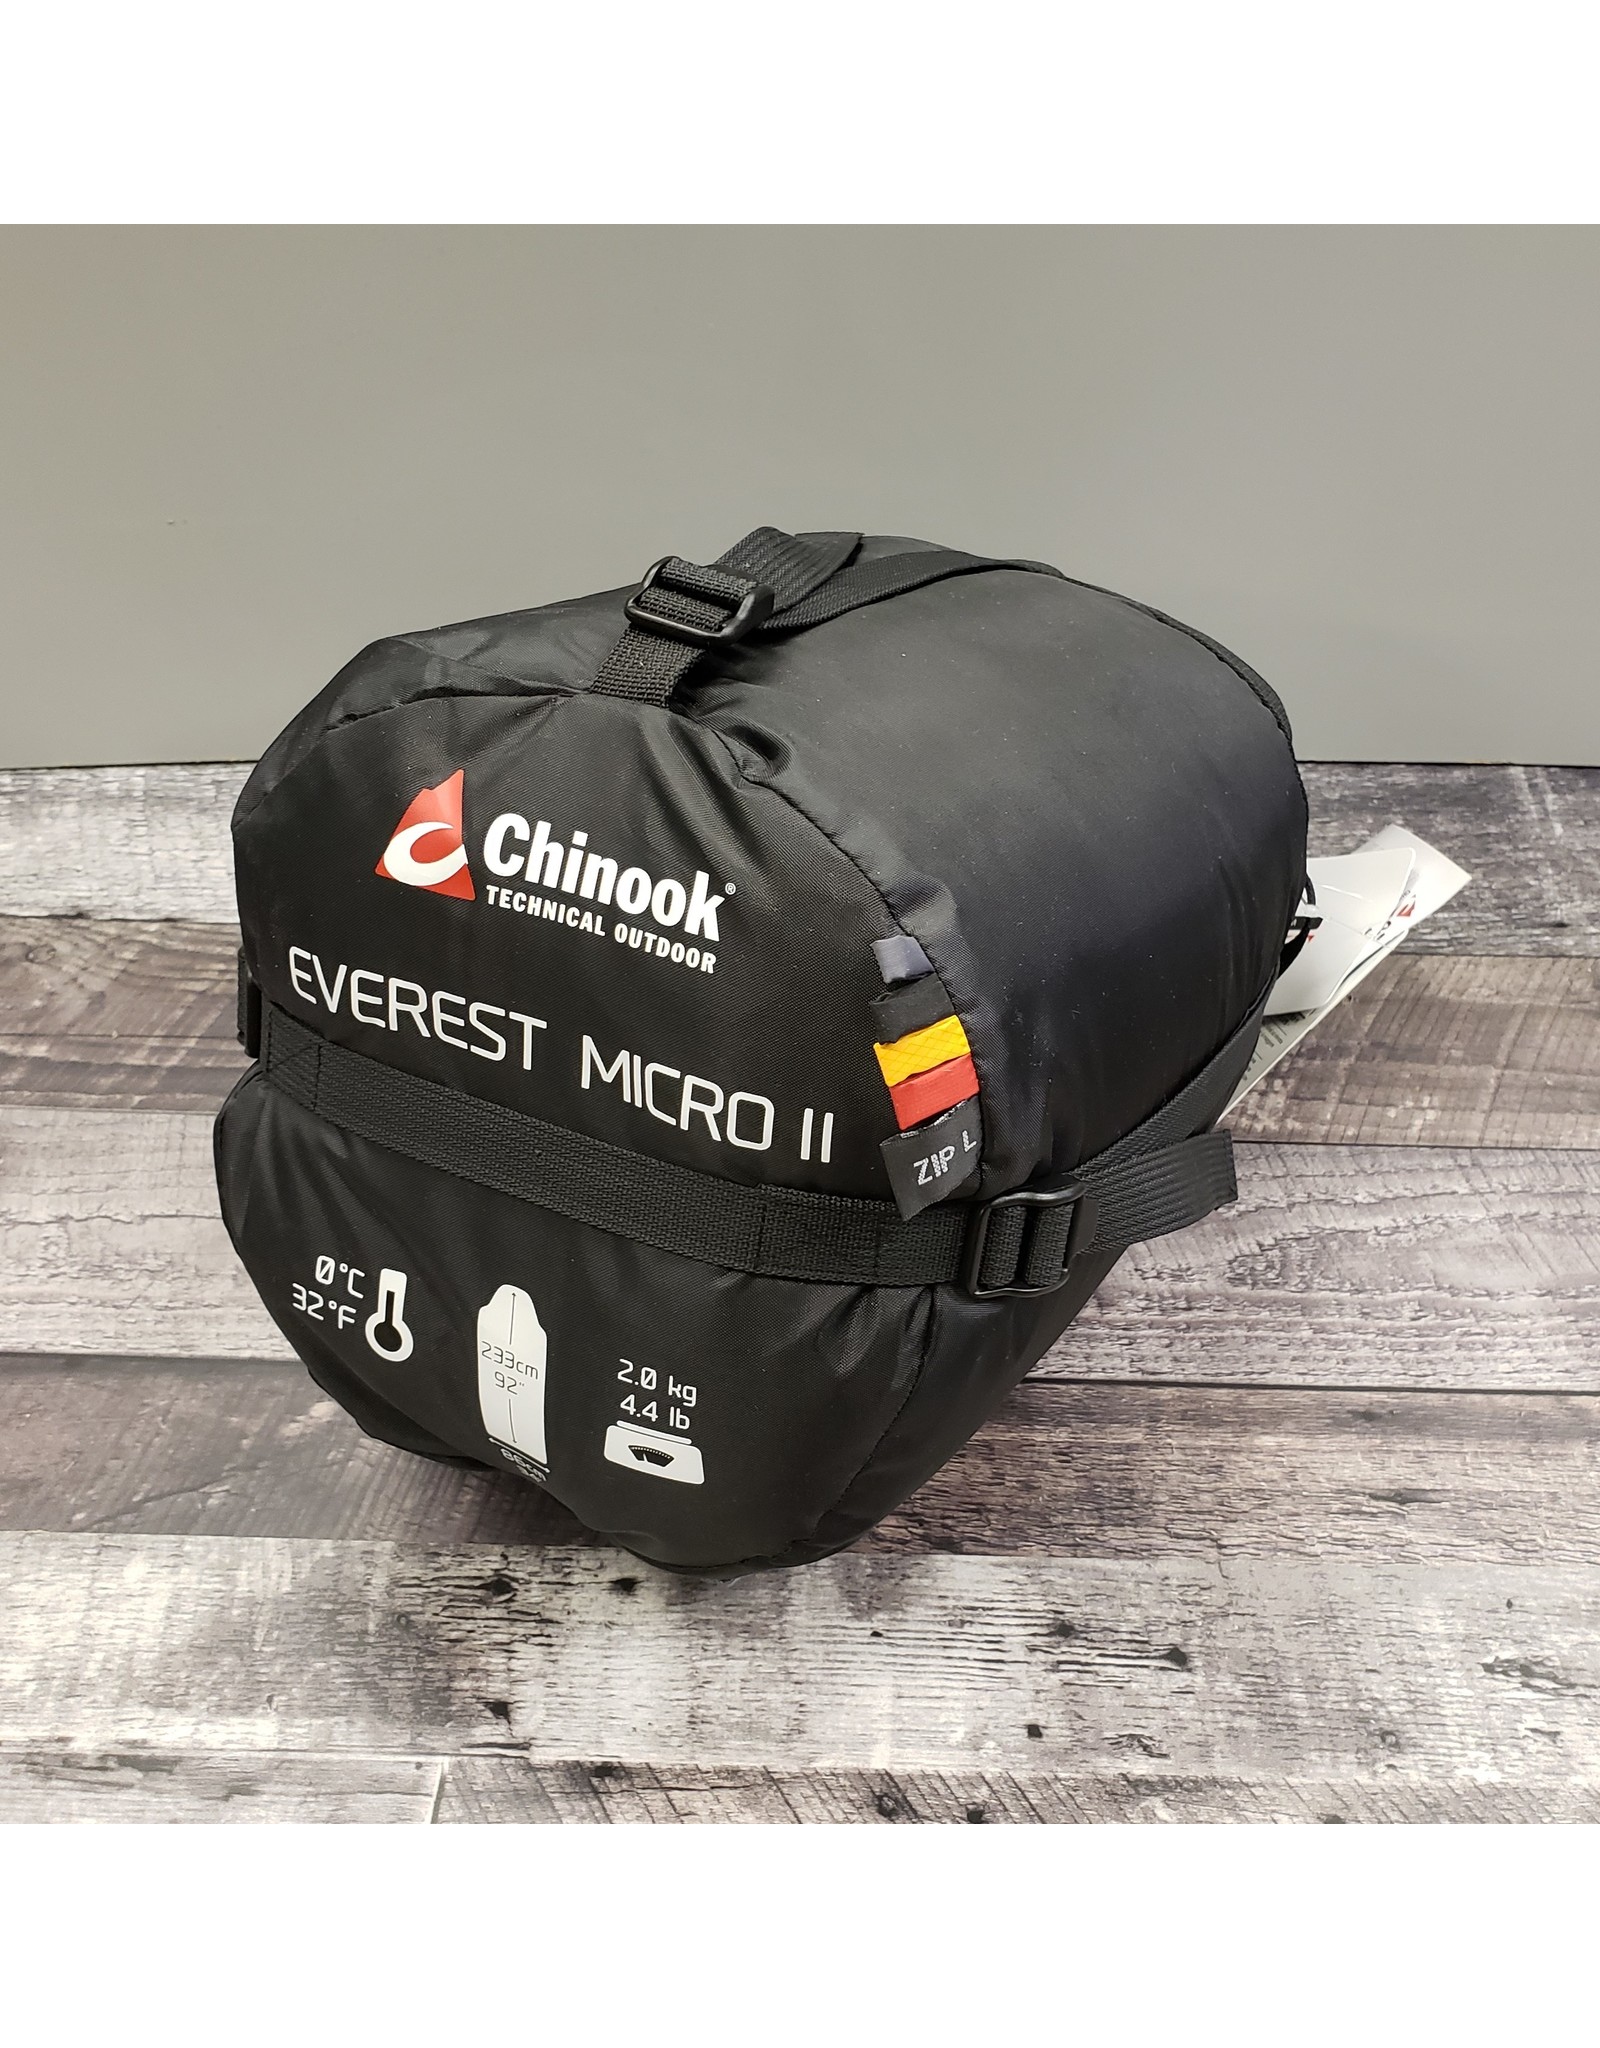 CHINOOK TECHNICAL OUTDOOR Chinook Everest Micro II 32F Sleeping Bag